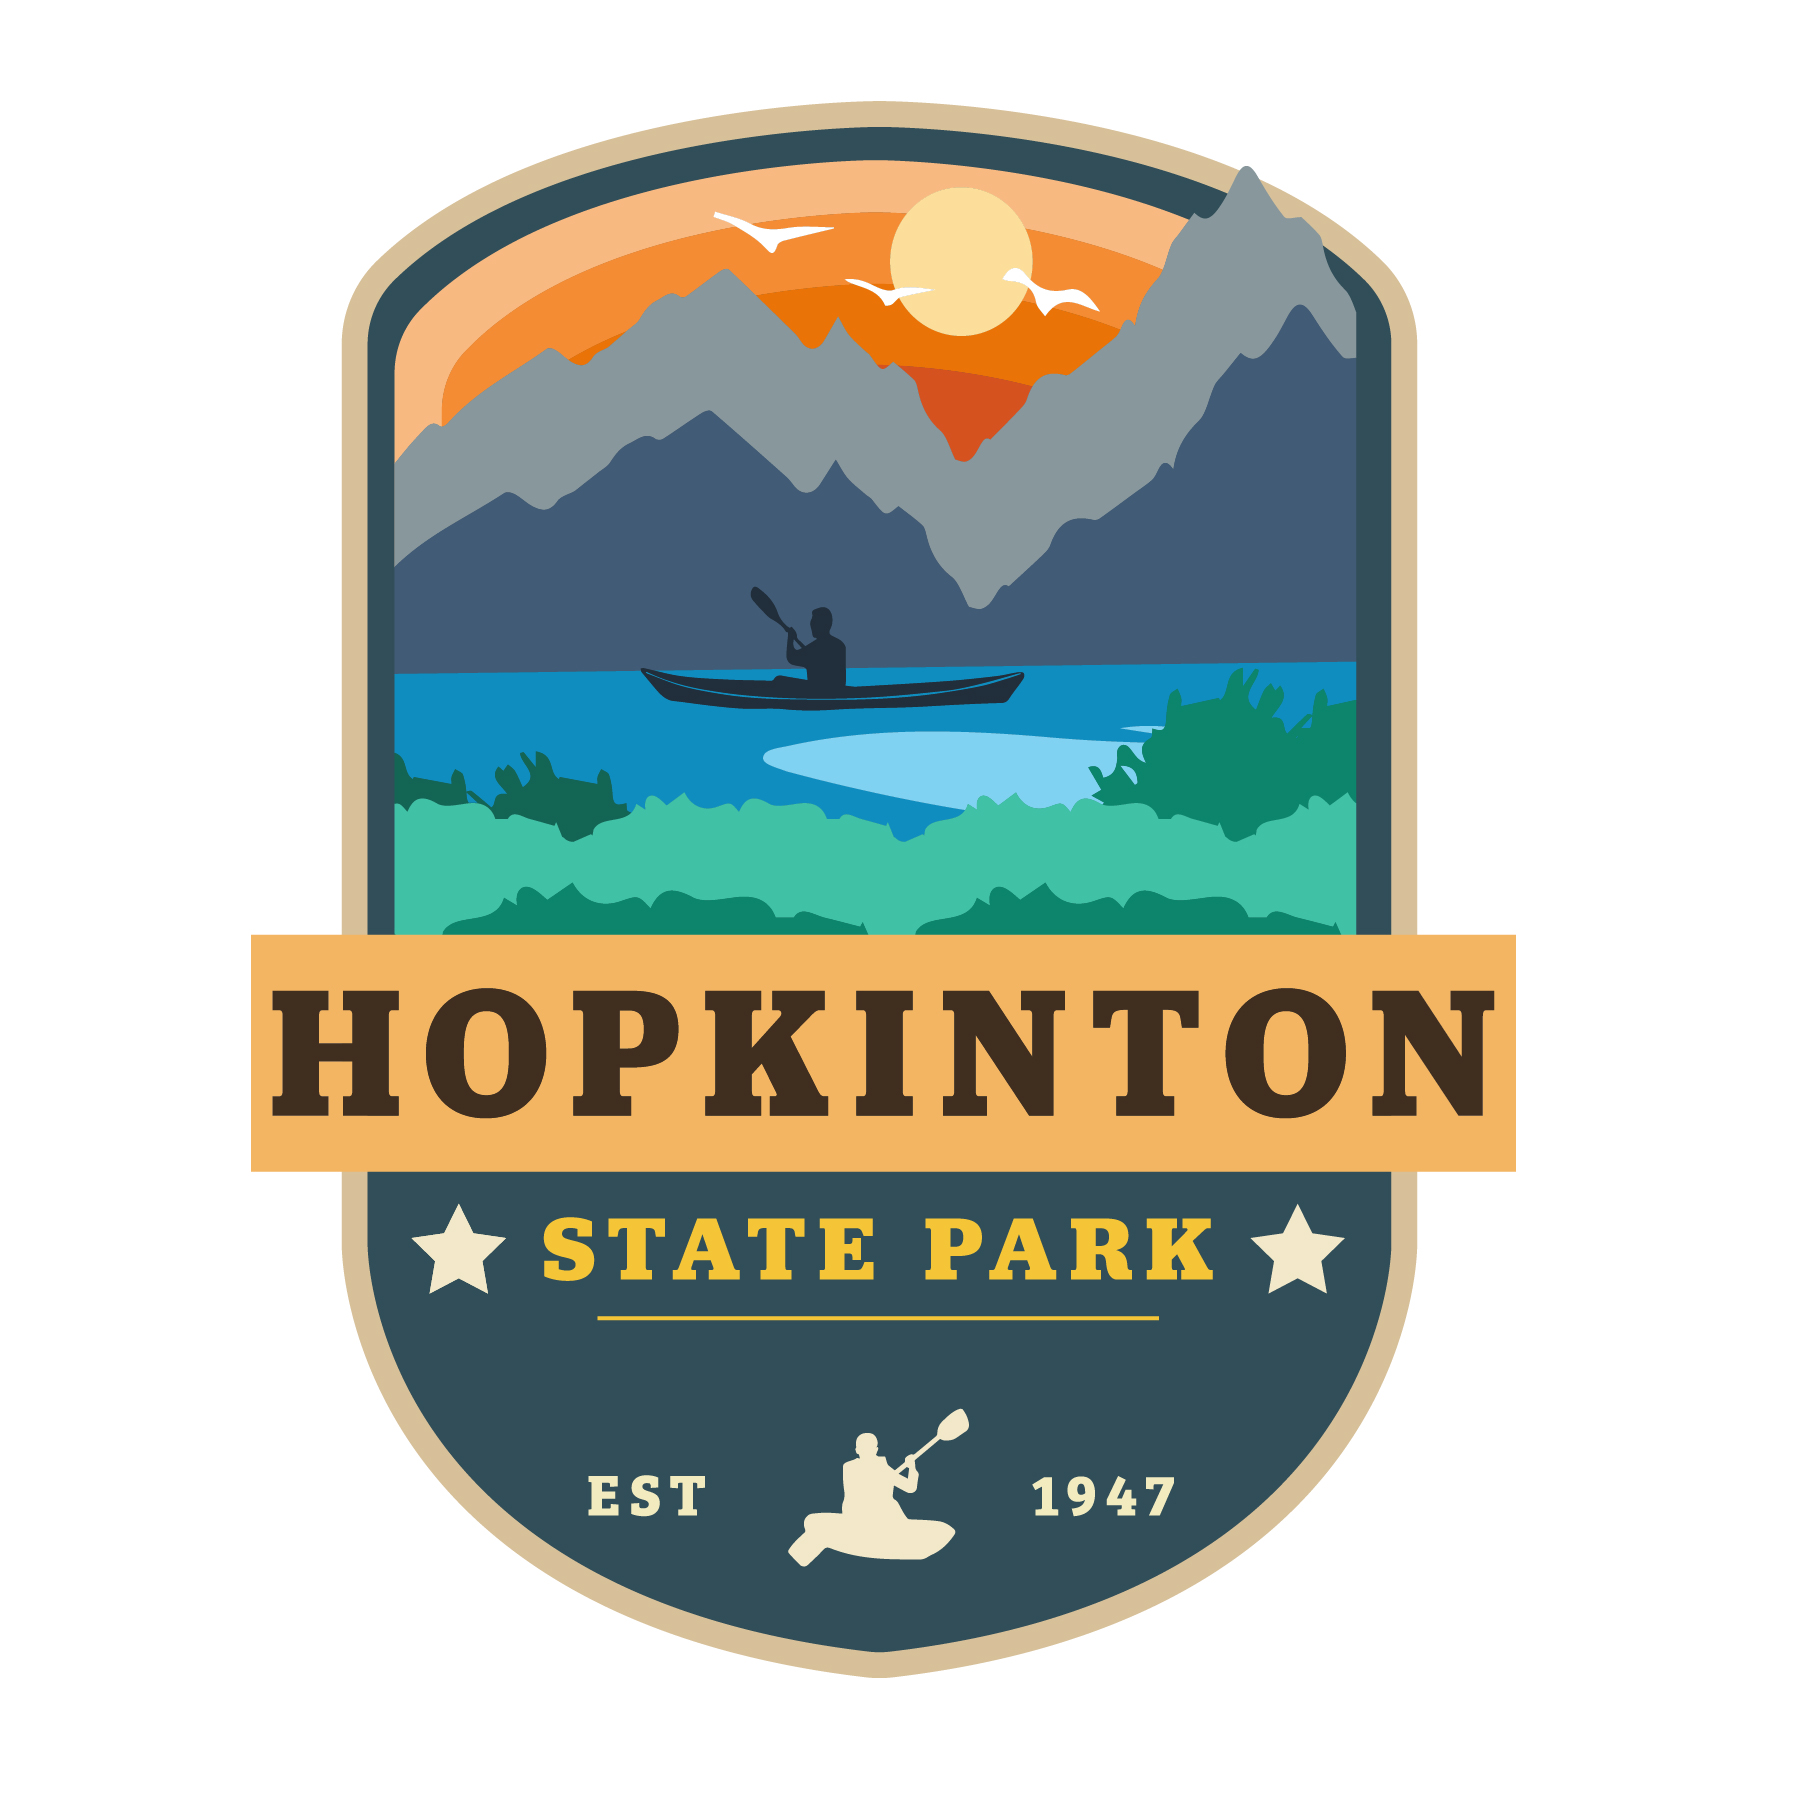 Hopkinton Badge Design logo design by logo designer Dandelion Studio for your inspiration and for the worlds largest logo competition